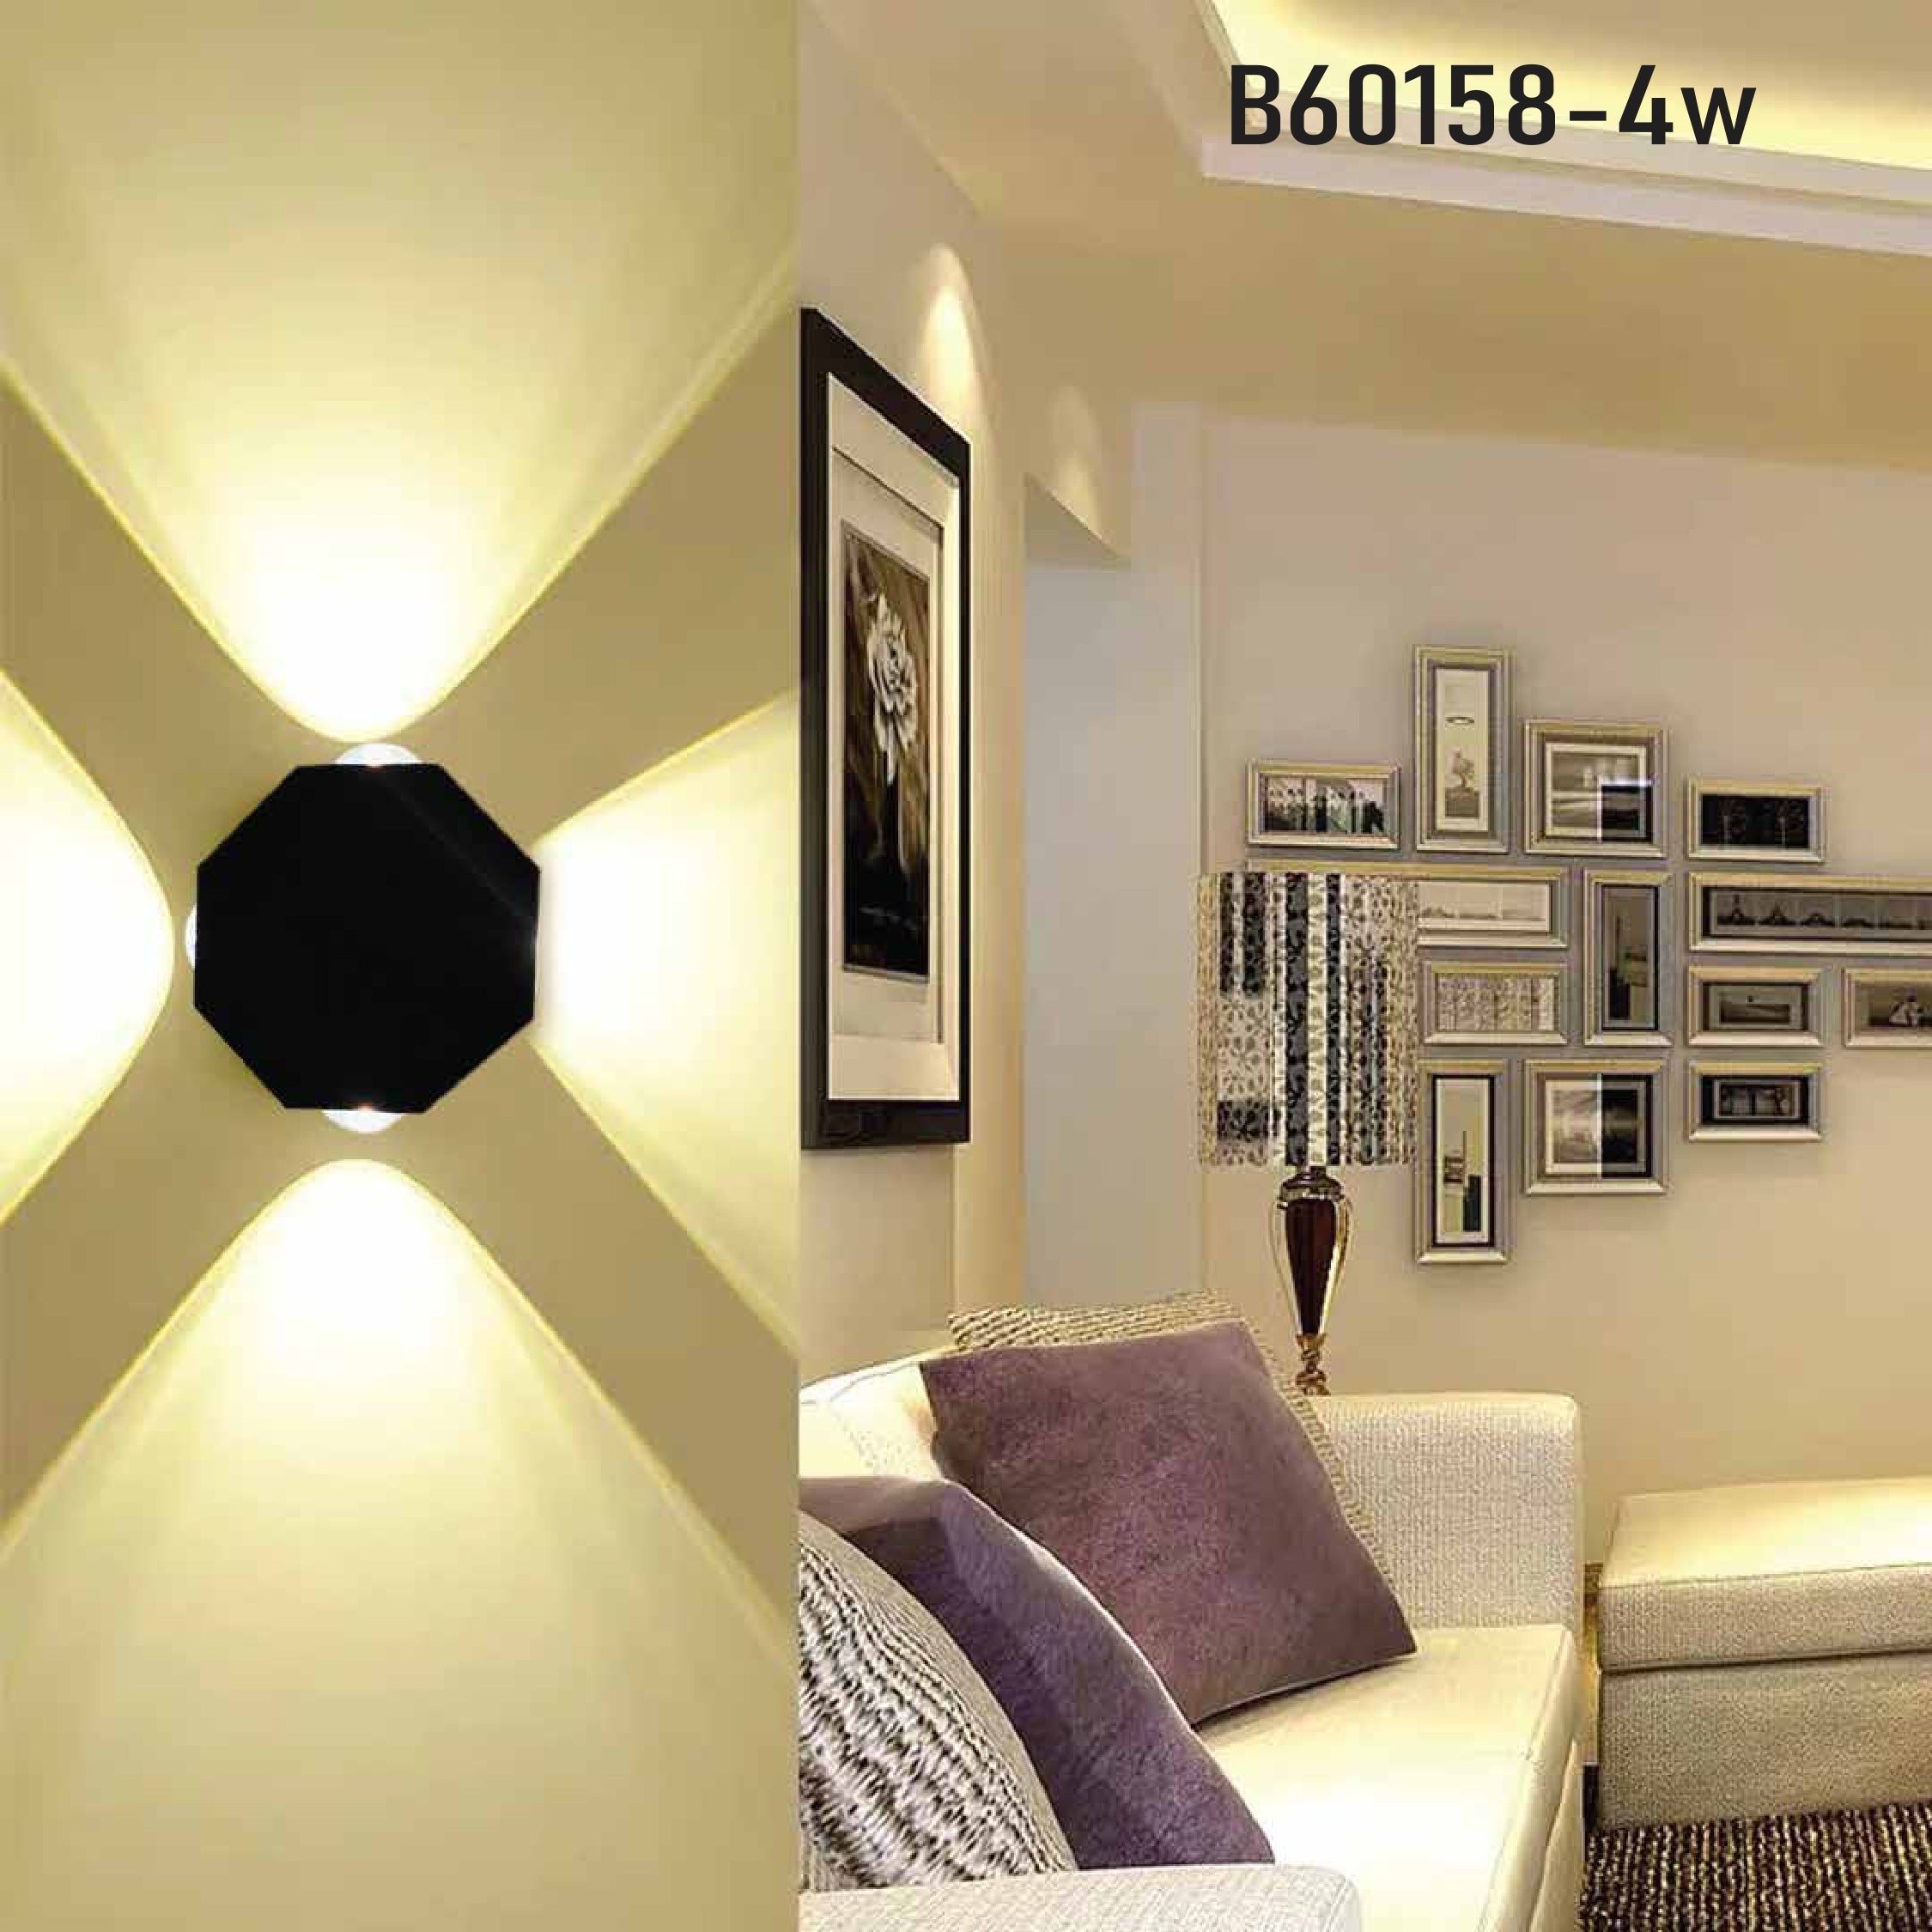 LED Outdoor Wall Light | B60158-4w-Black